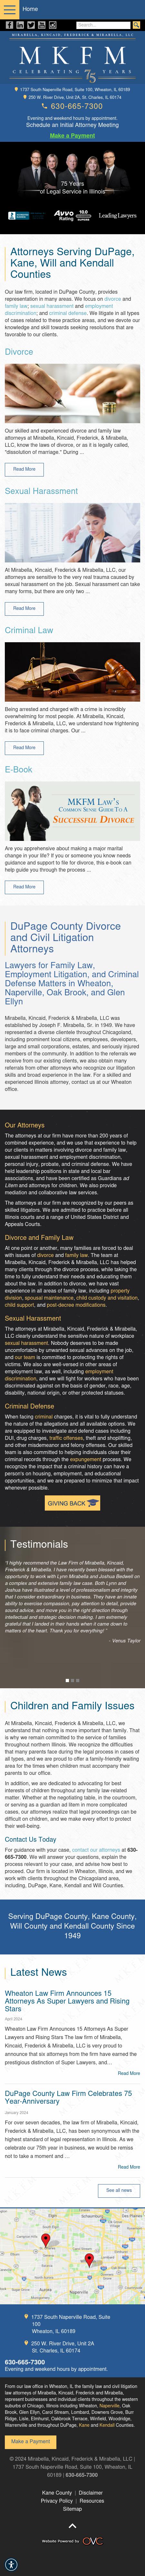 Mirabella, Kincaid, Frederick & Mirabella, LLC - Wheaton IL Lawyers